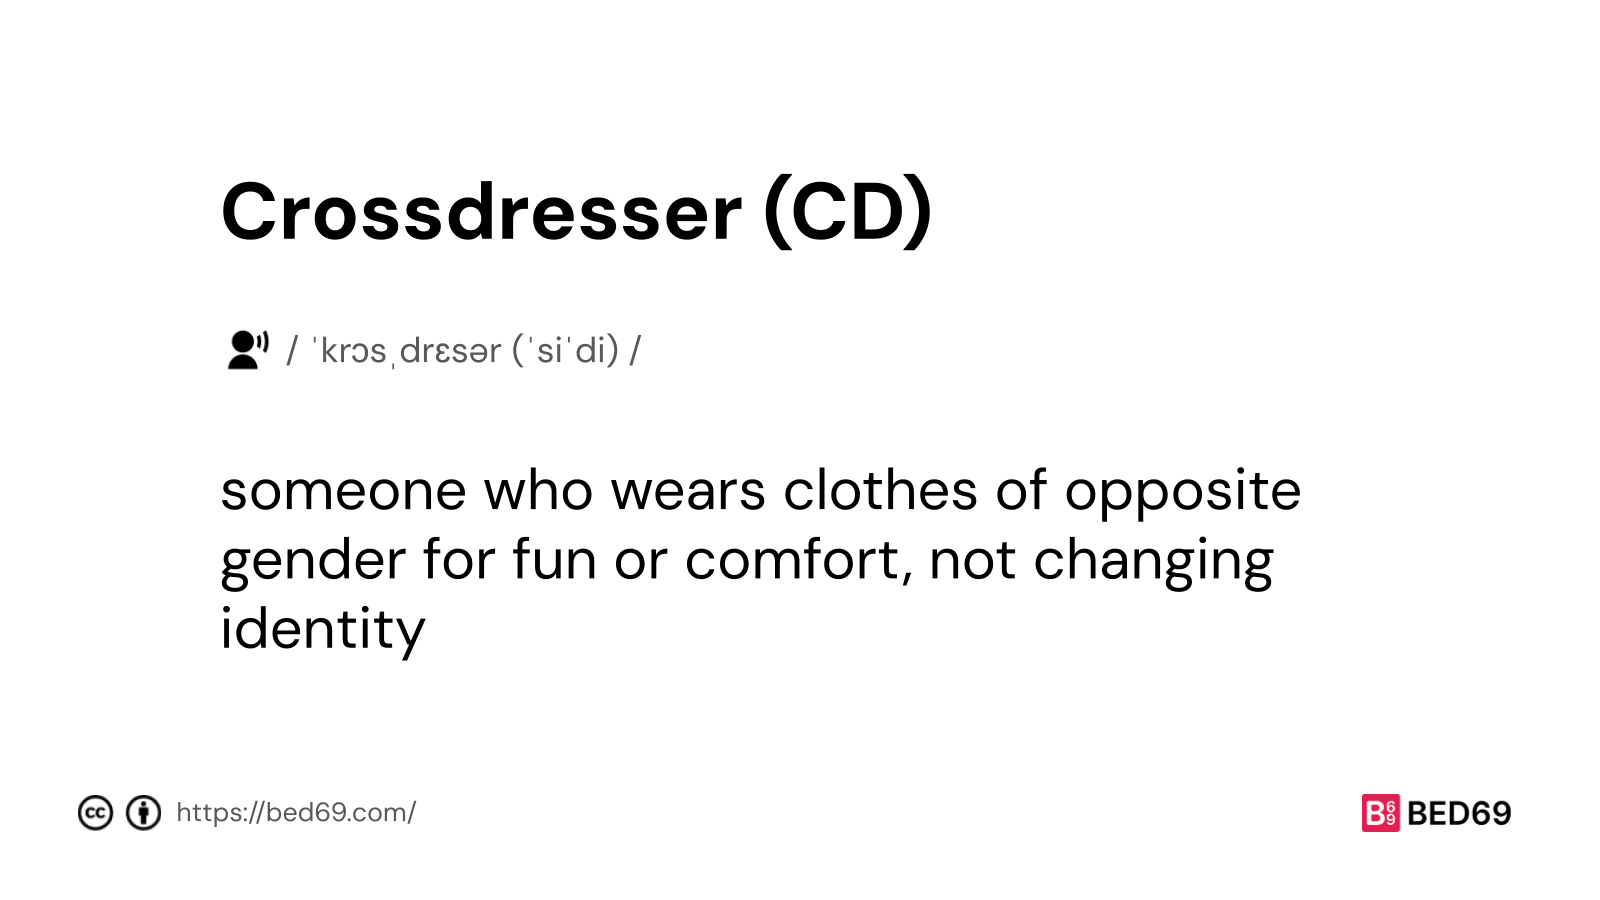 Crossdresser (CD) - Word Definition